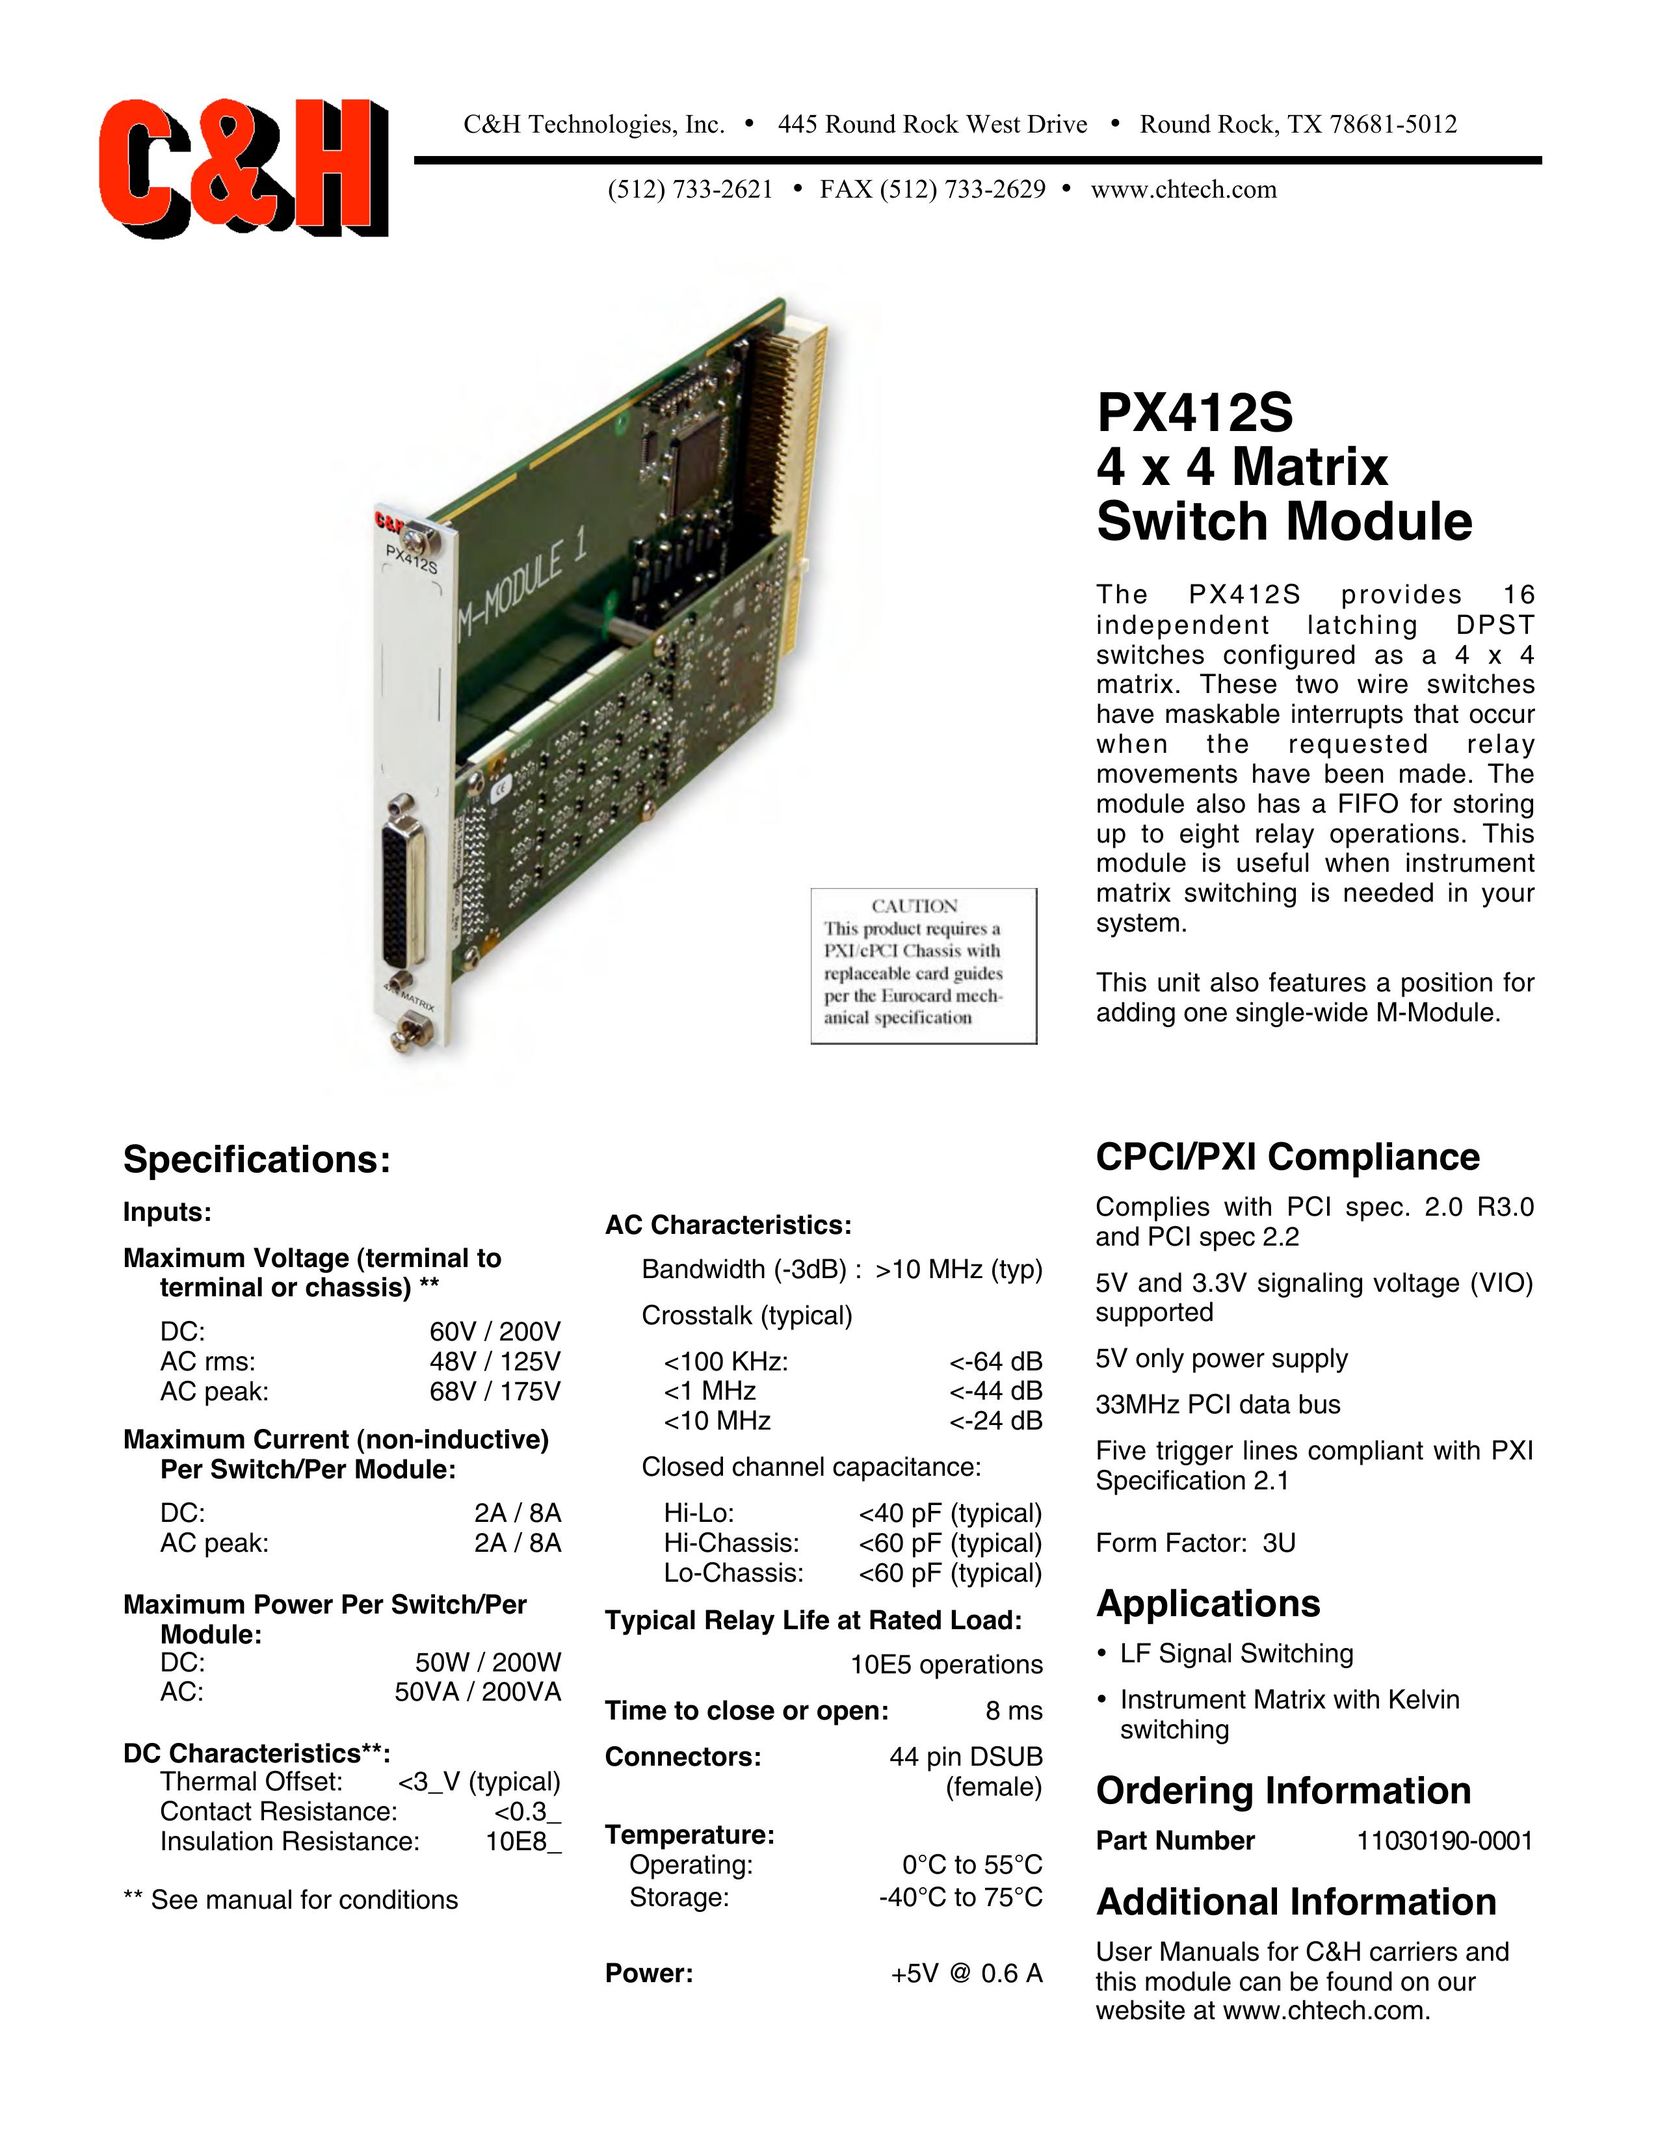 CH Tech PX412S Switch User Manual